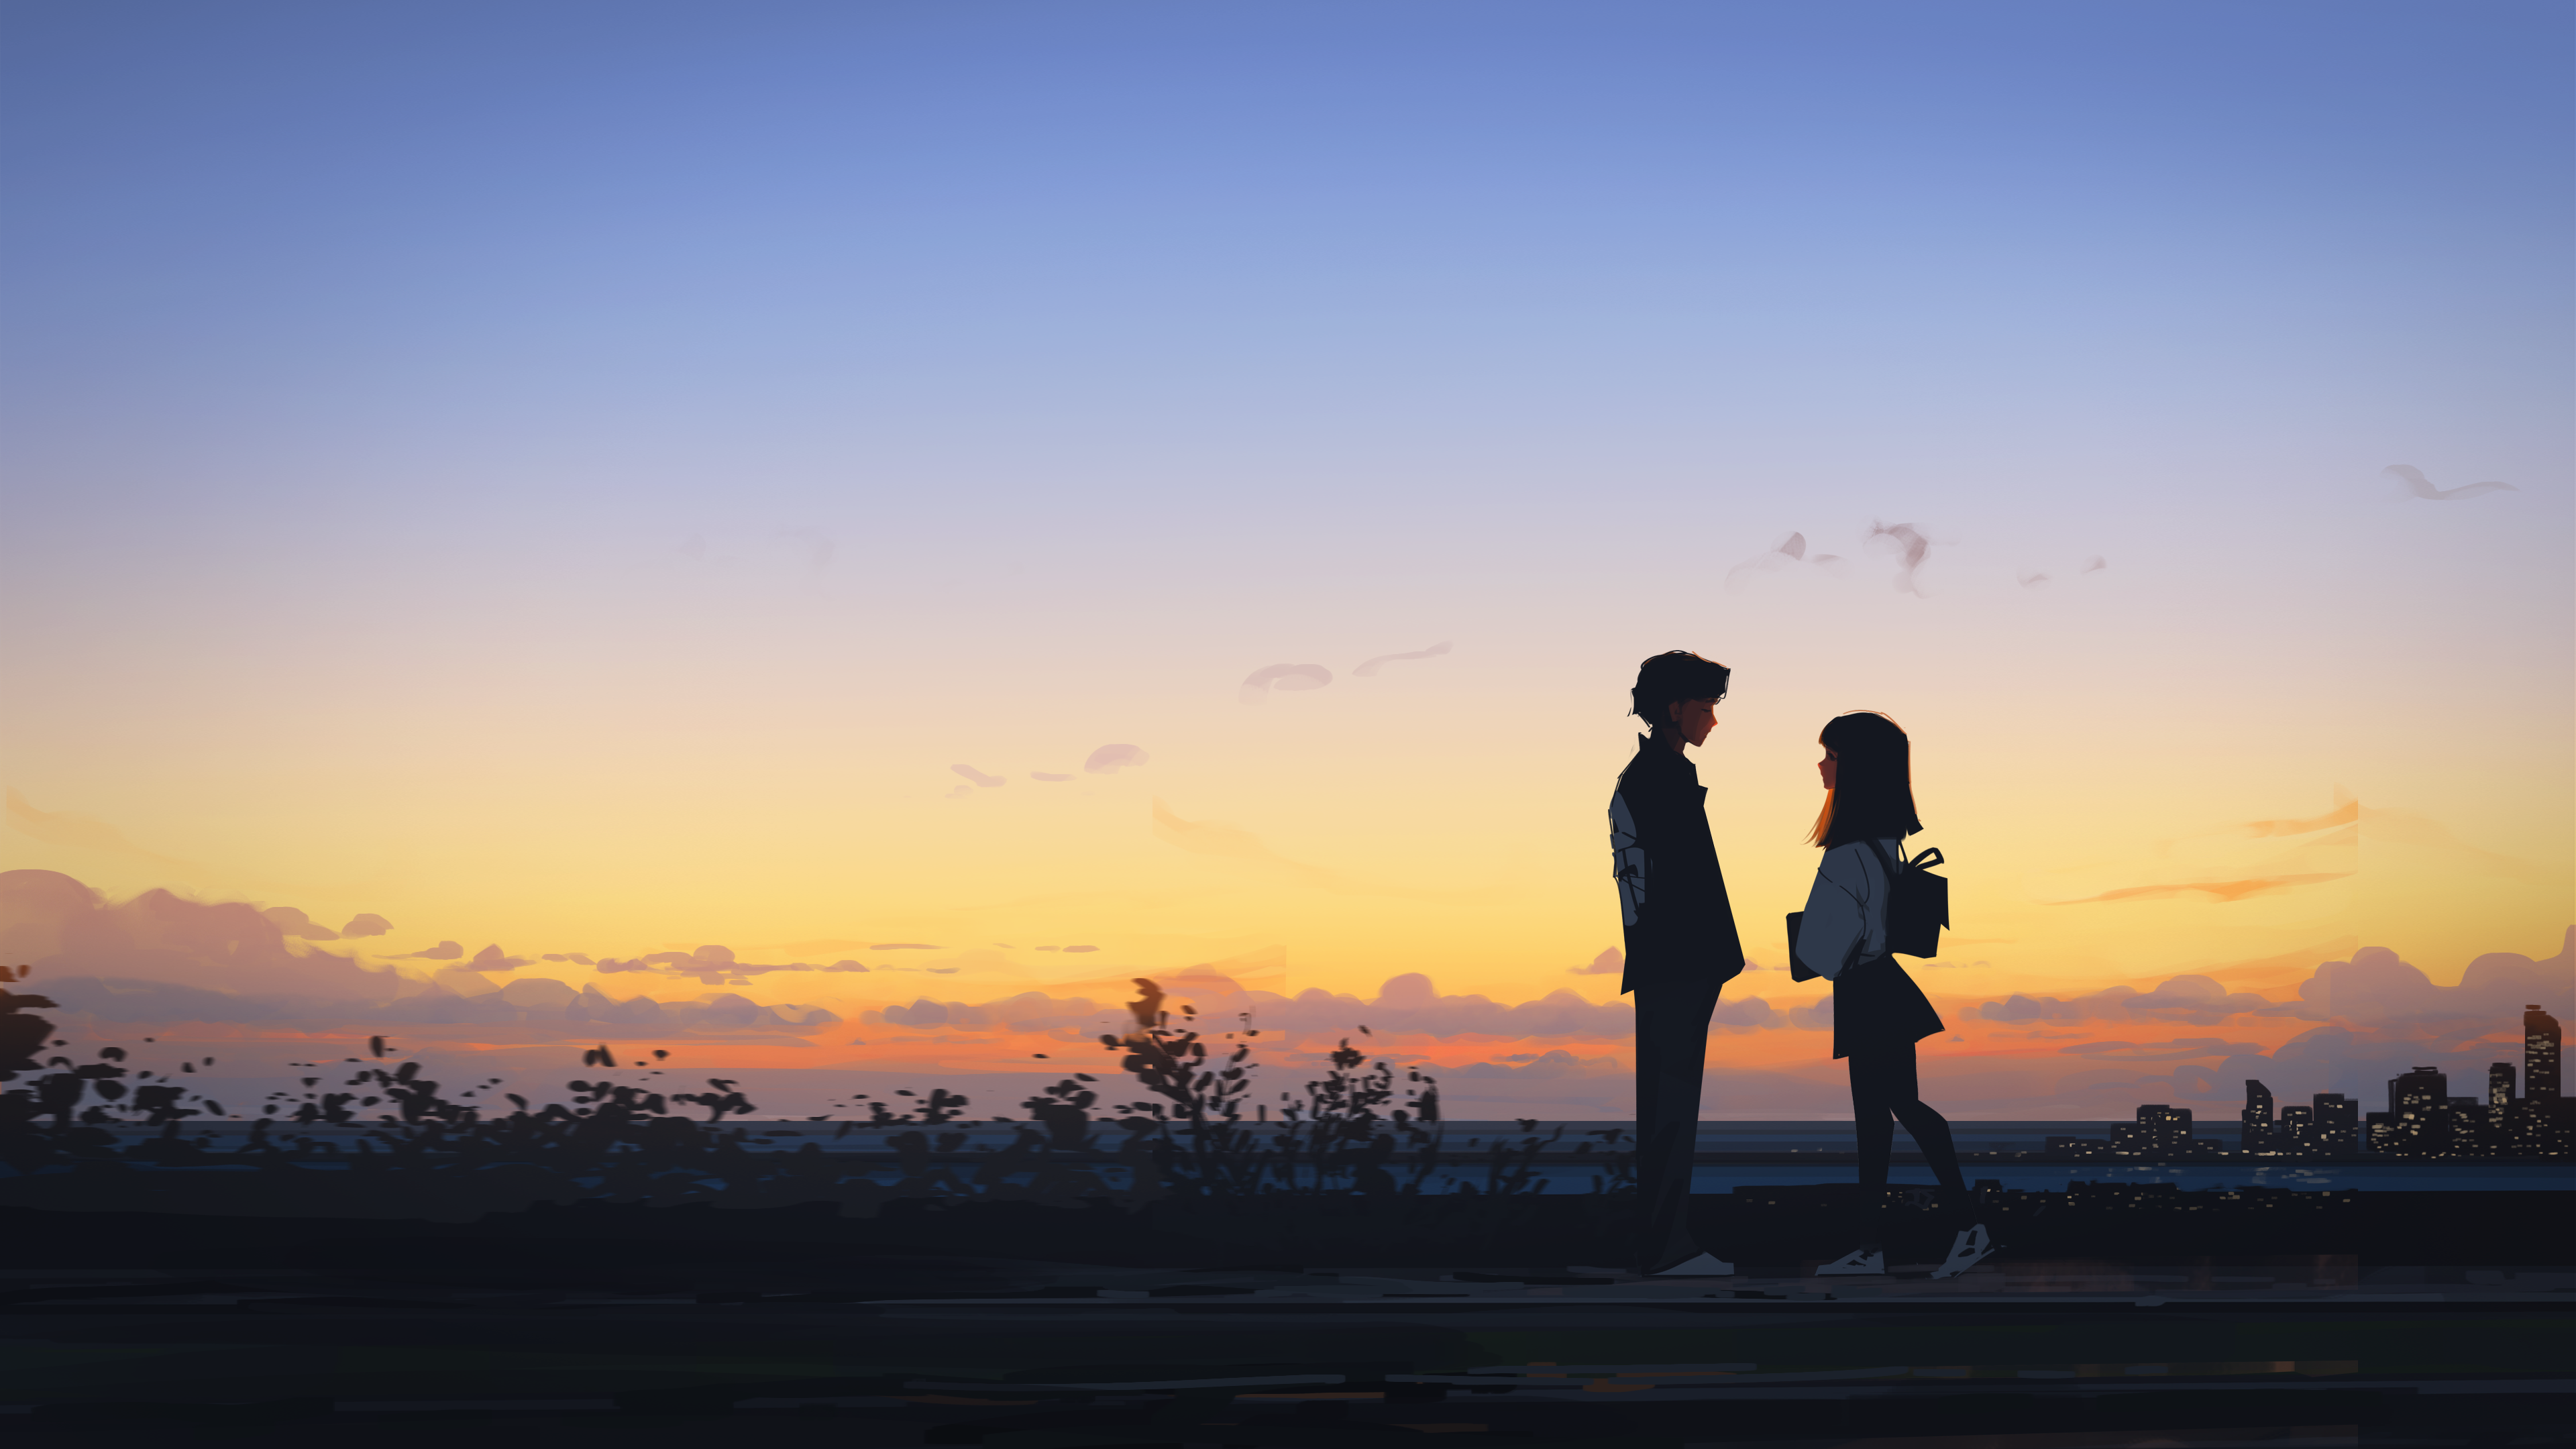 Sam Yang Digital Art Artwork Illustration Women Couple Men Landscape Clouds City Sunset 4K 3840x2160